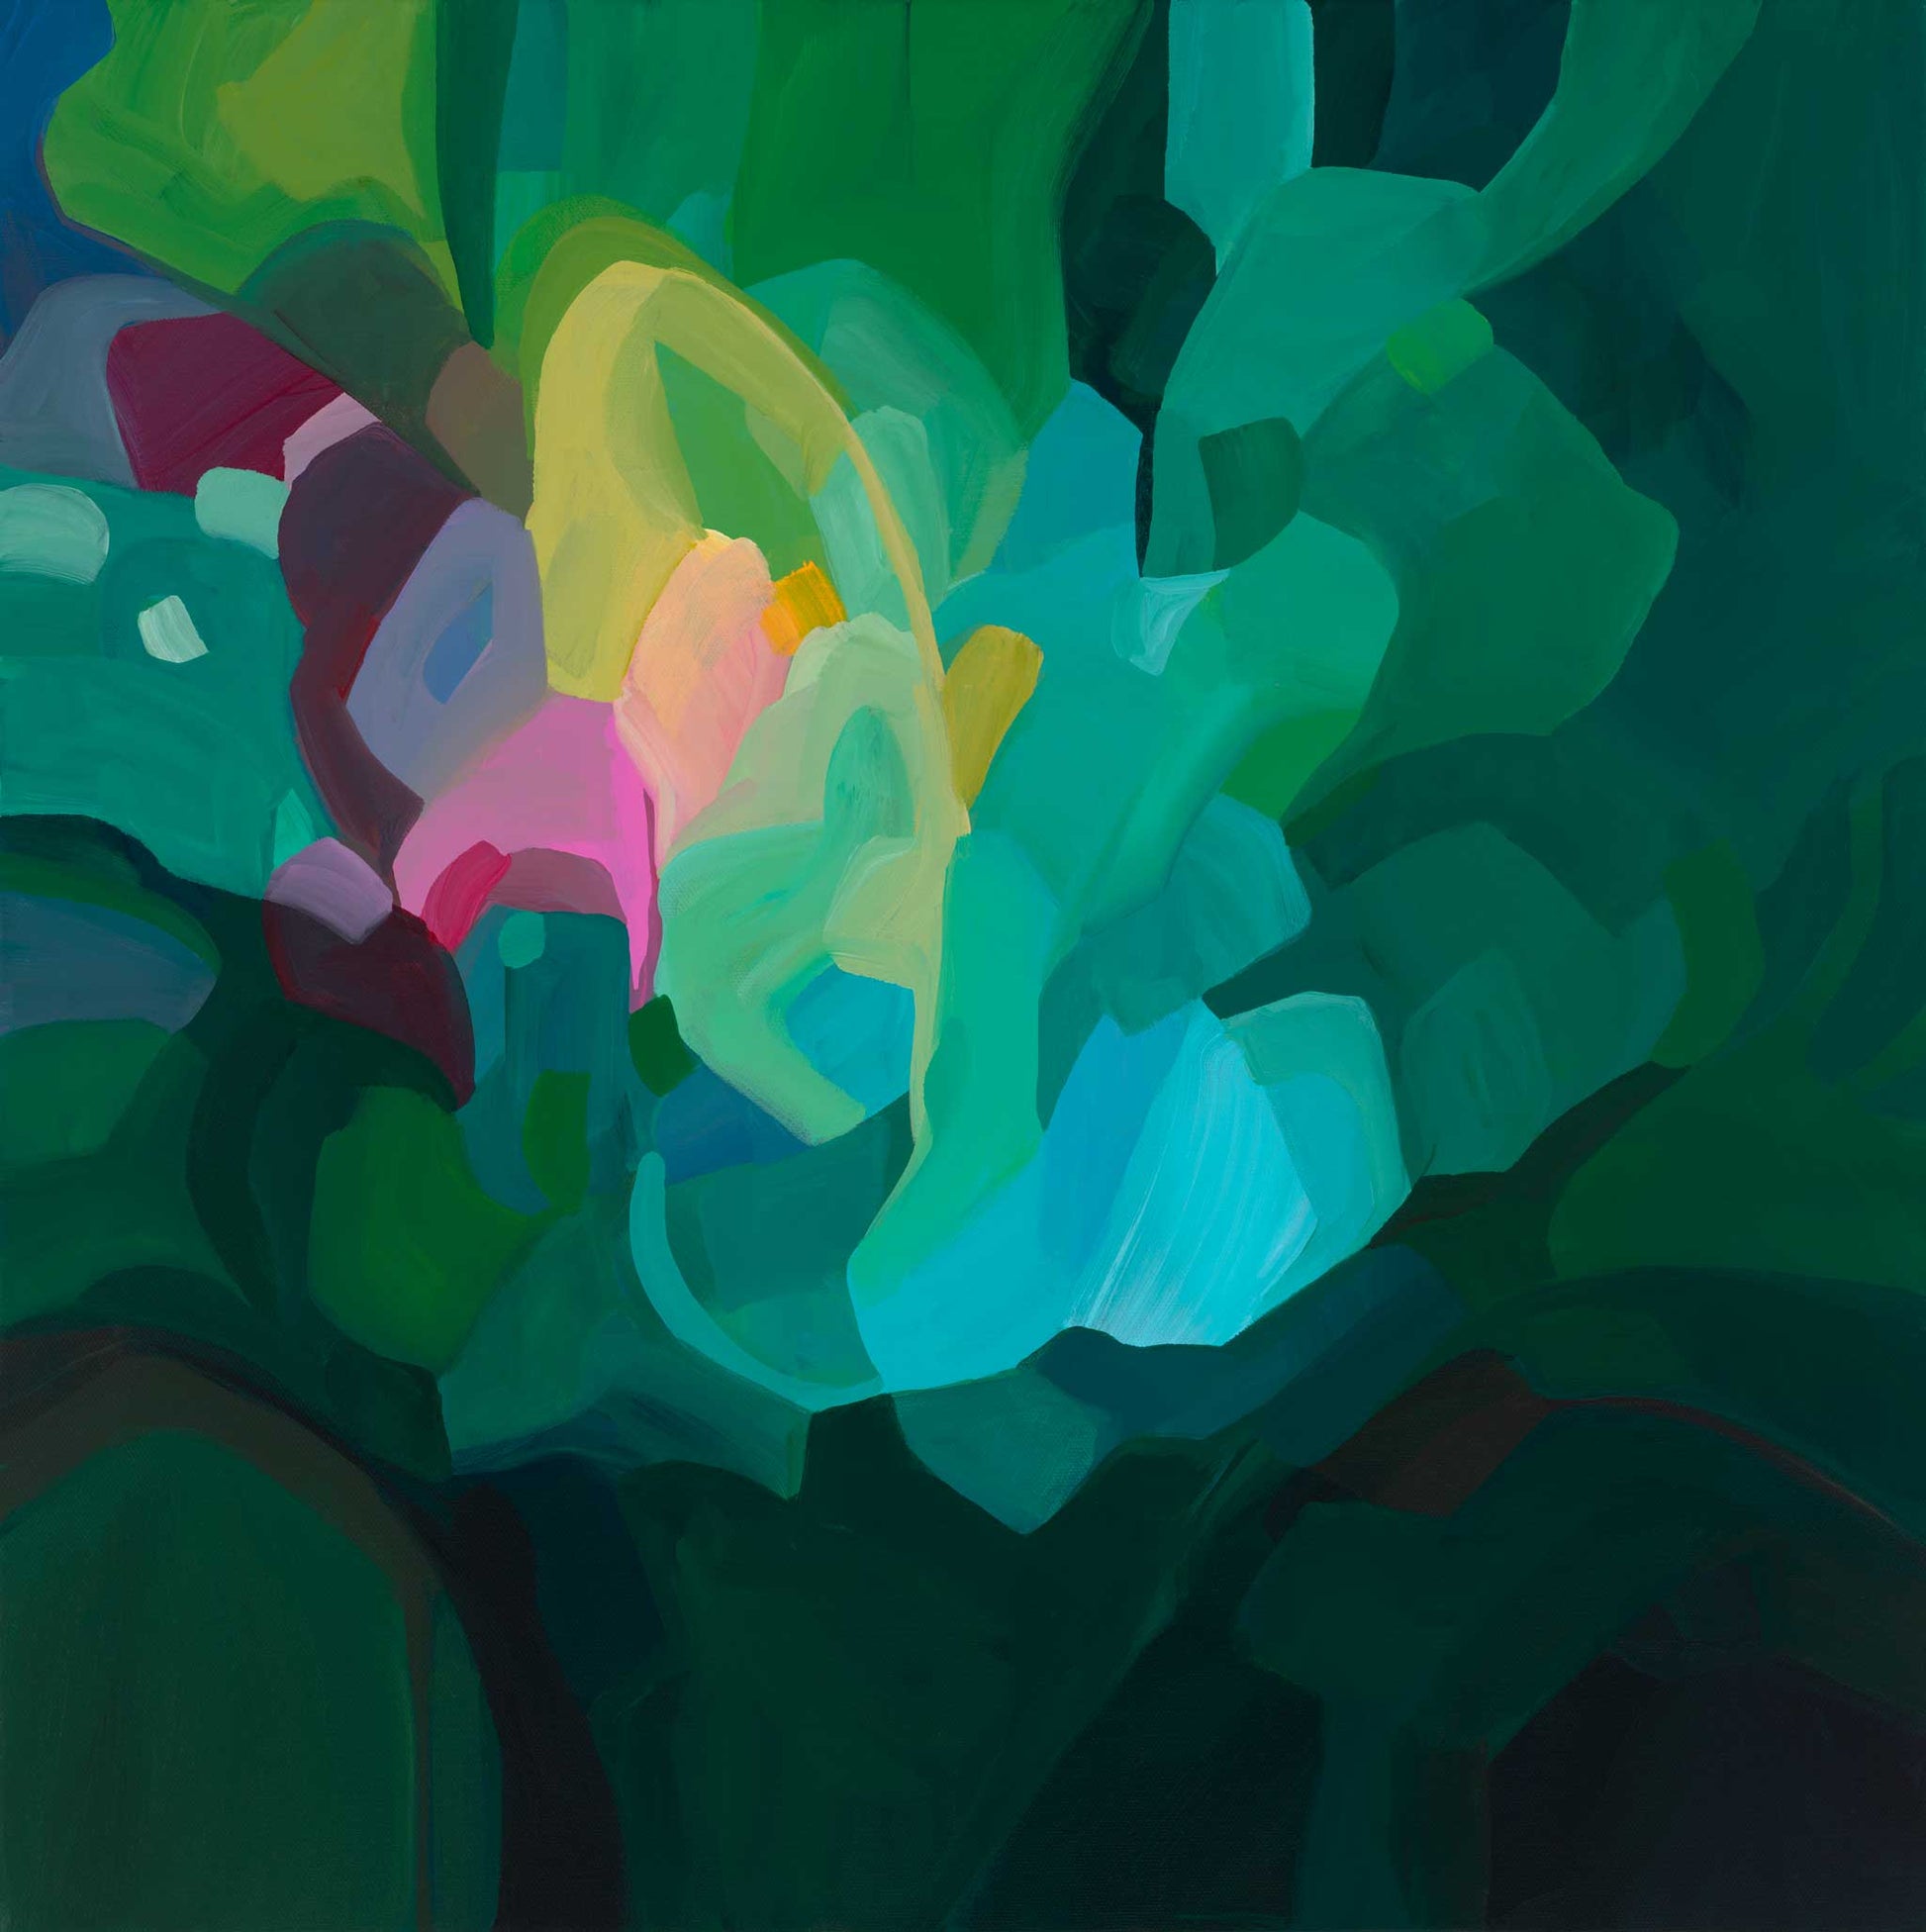 Emerald Green abstract art print by Canadian artist Susannah Bleasby